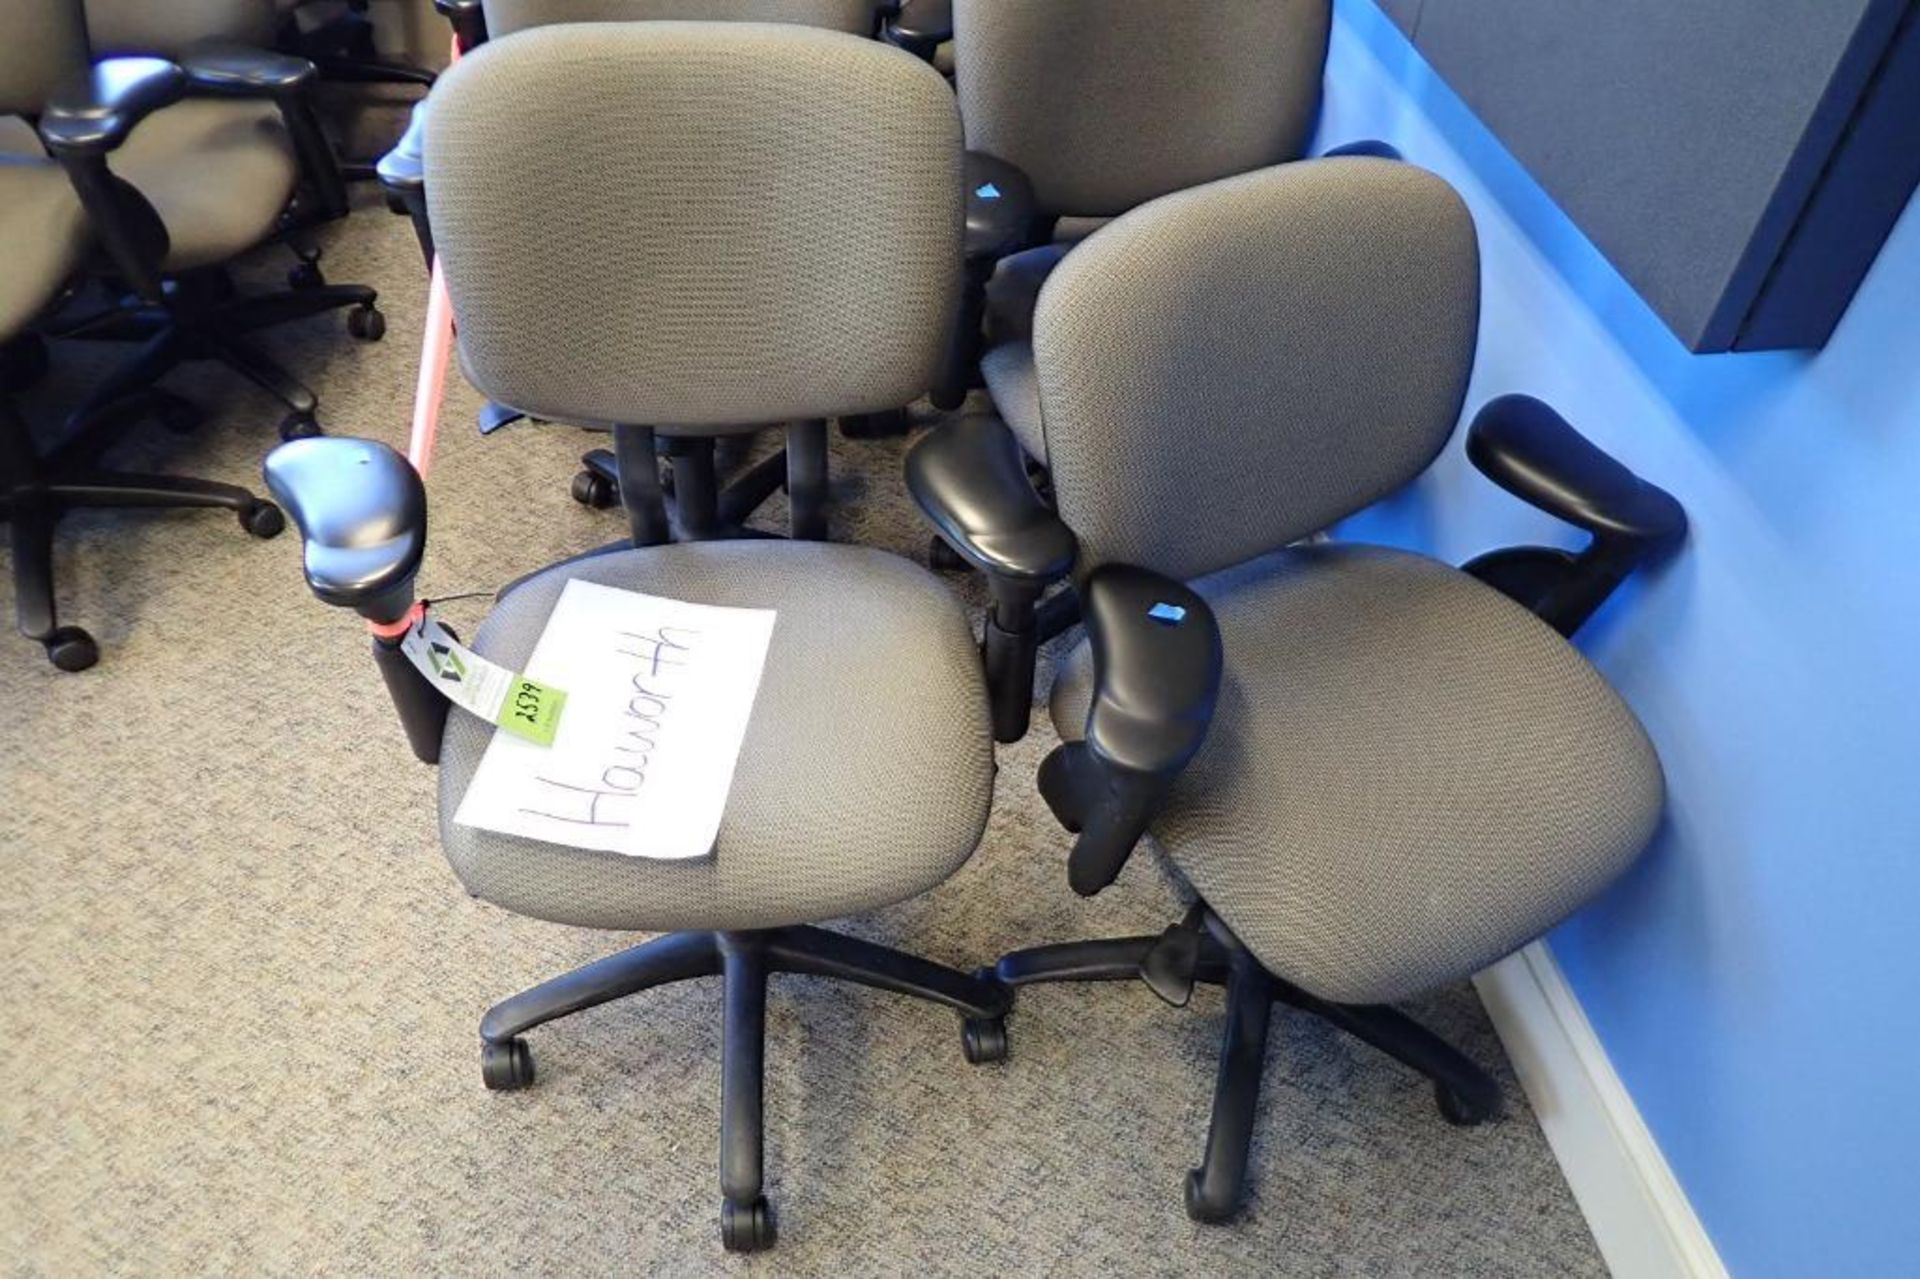 Haworth task chair - Image 3 of 4